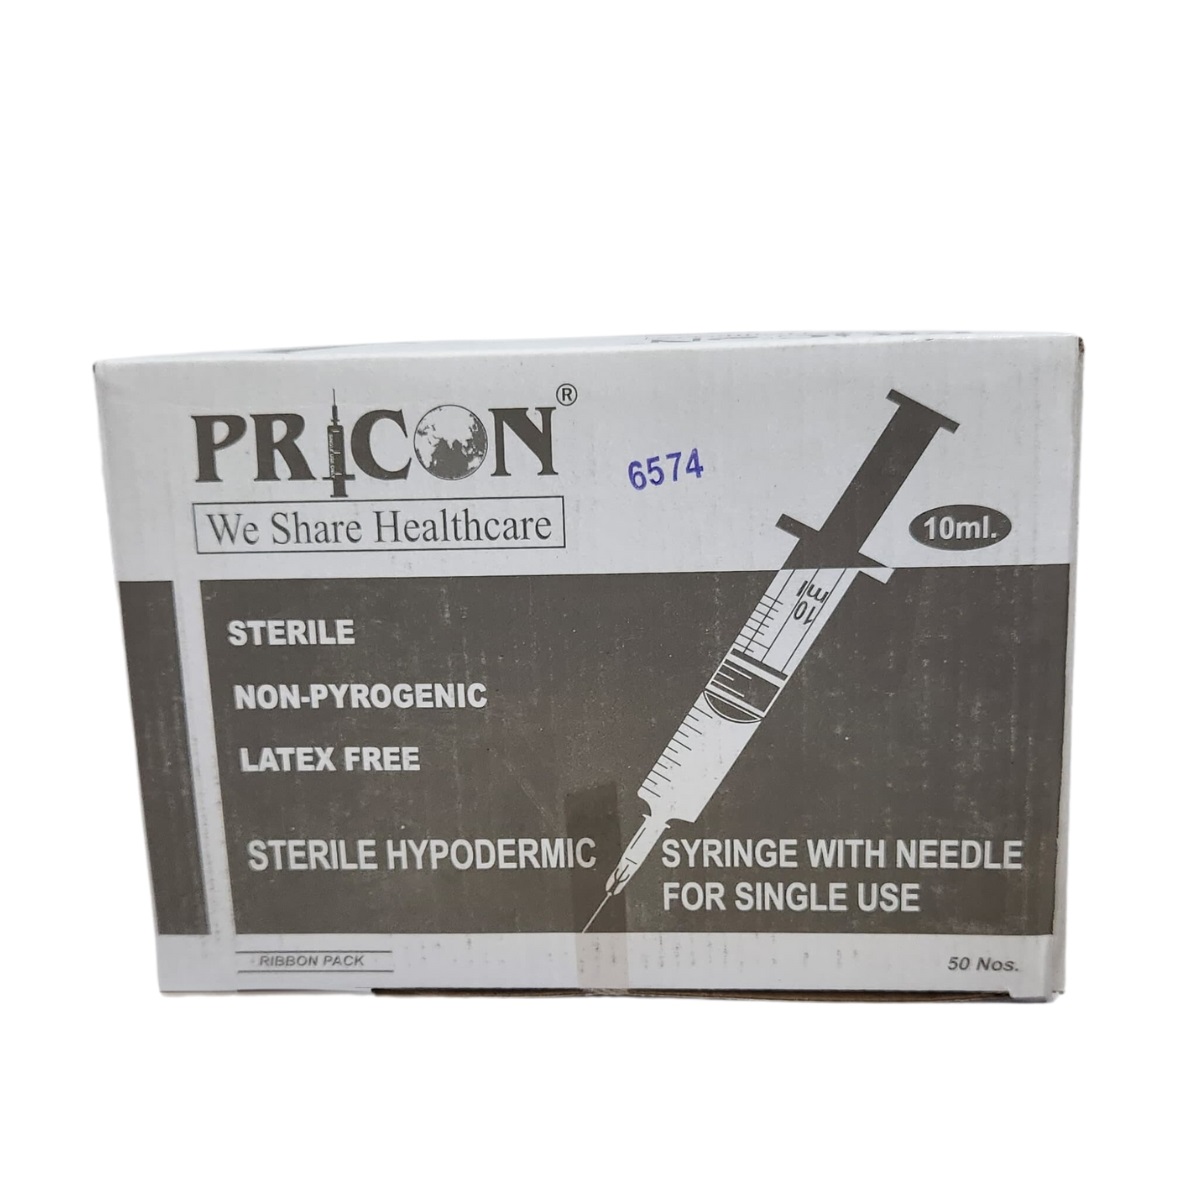 Pricon 10ml Syringe With Needle - 50 Units Pack